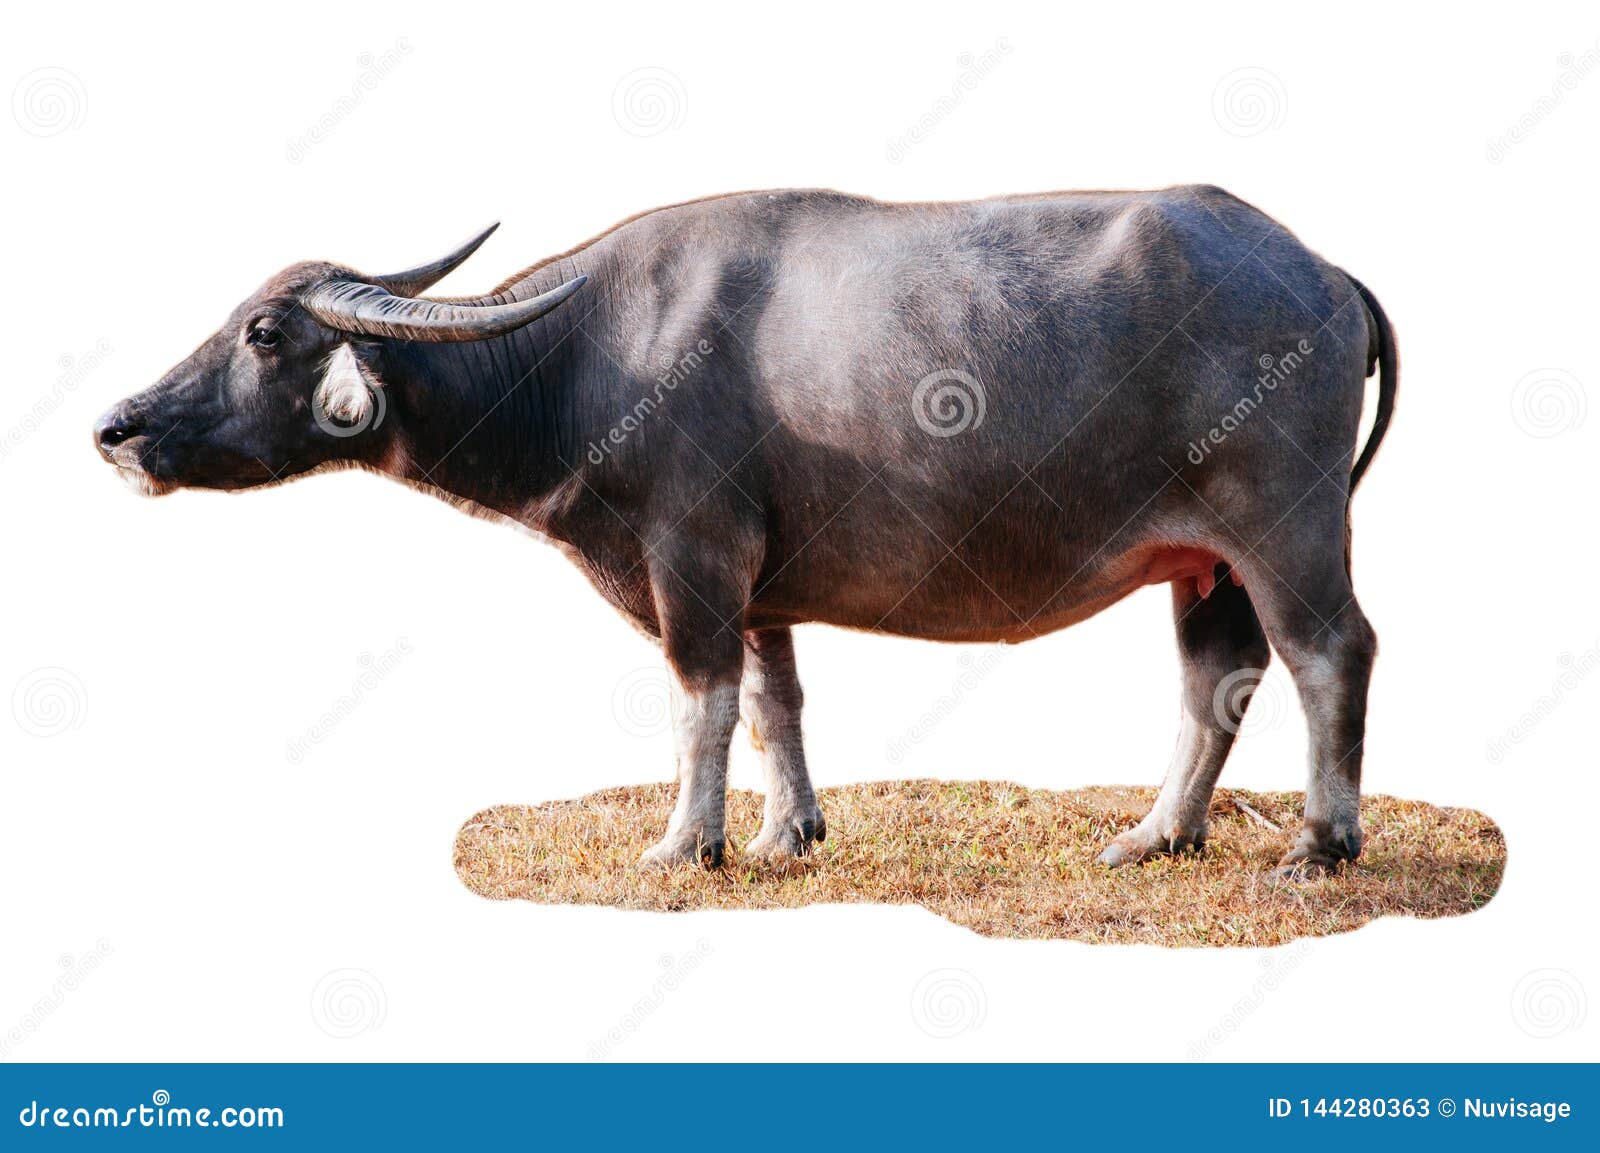 Water Buffalo Local Thailand Asian Buffalo on White Background Stock Image  - Image of animals, countryside: 144280363